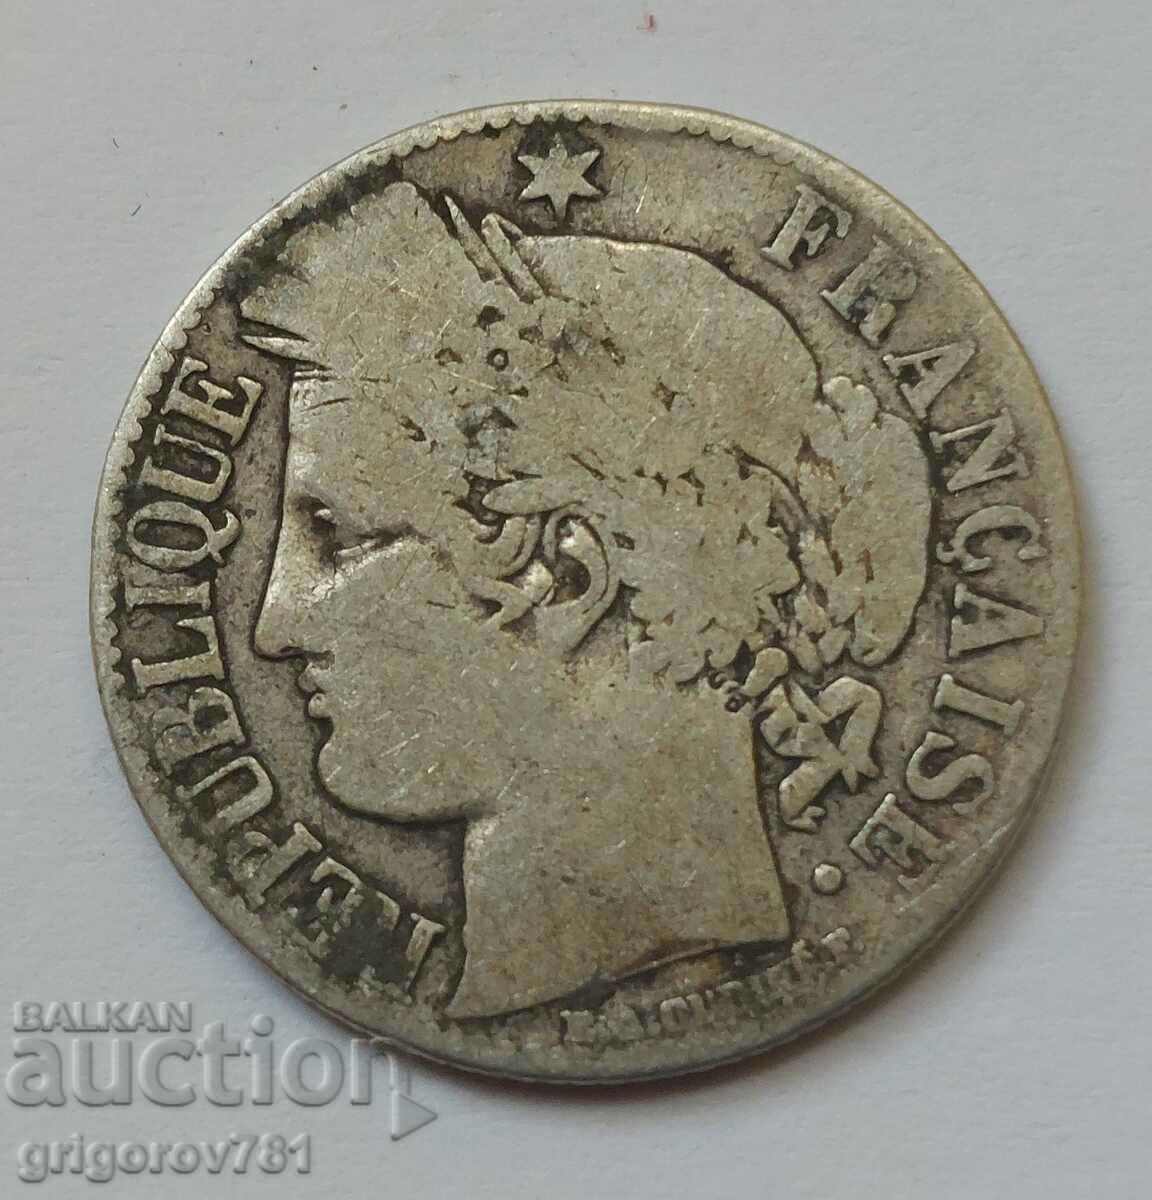 1 Franc Silver France 1881 A - Silver Coin #38